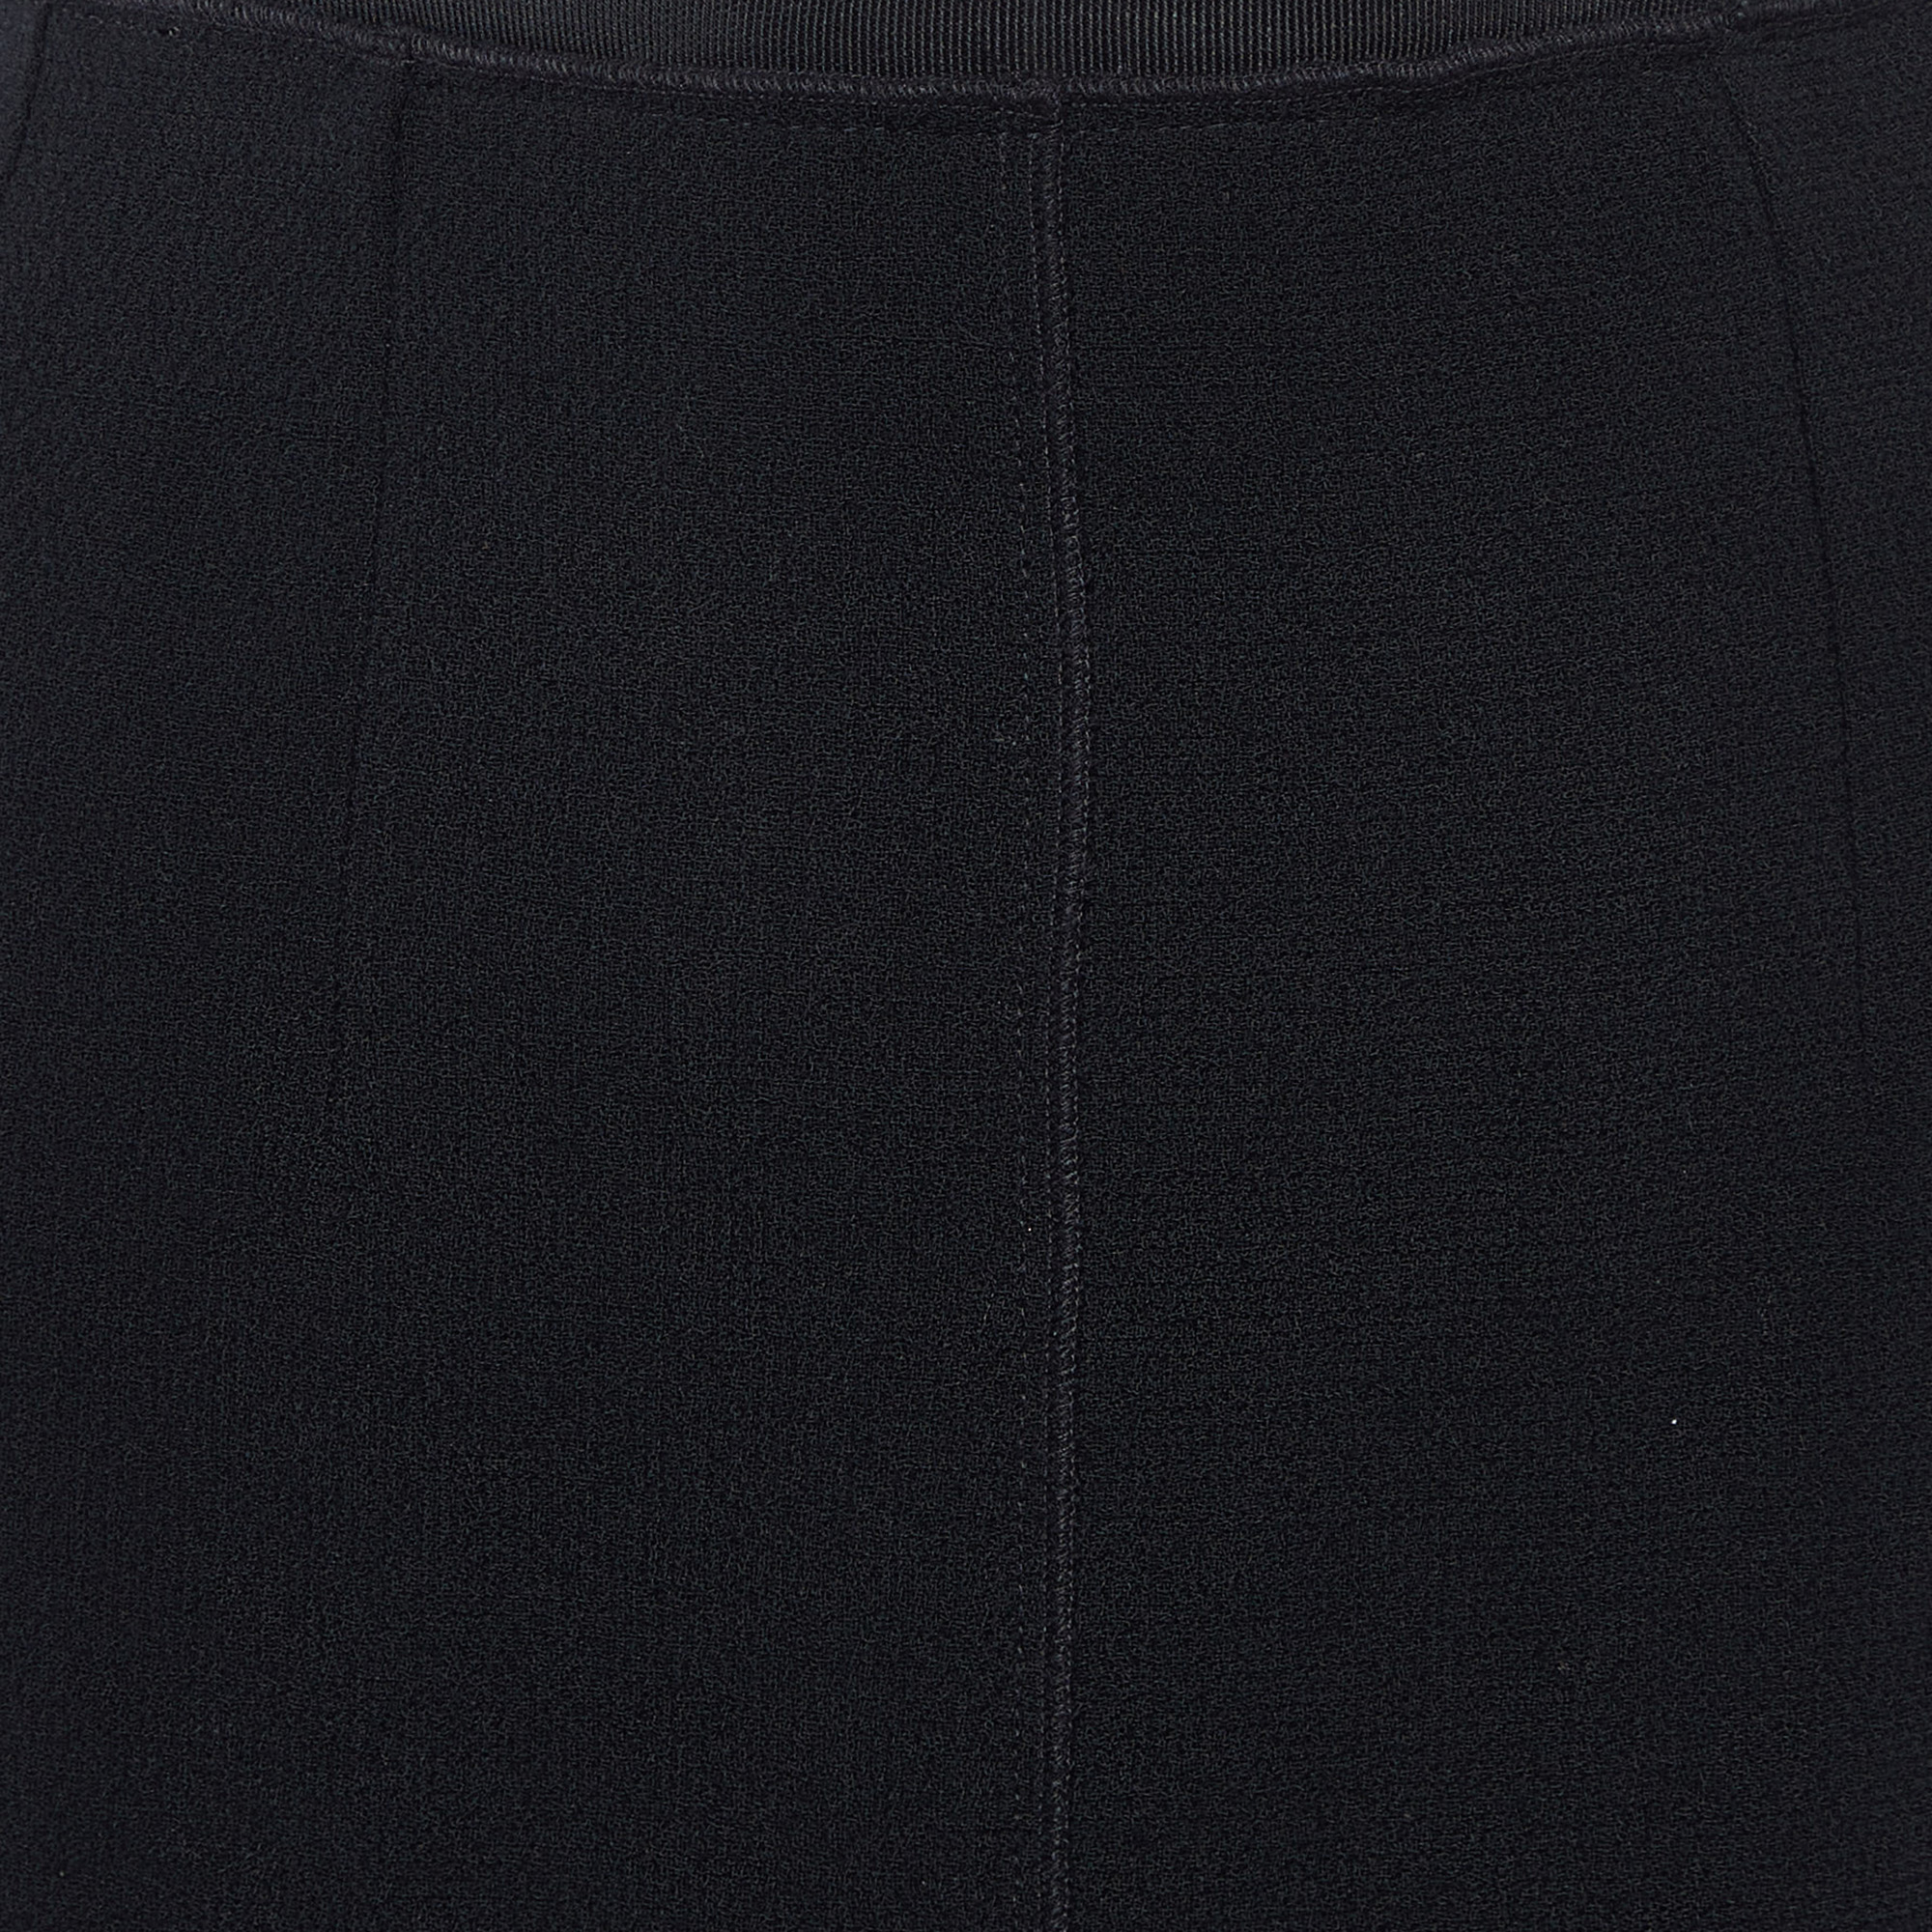 D&G Black Wool Pencil Skirt M